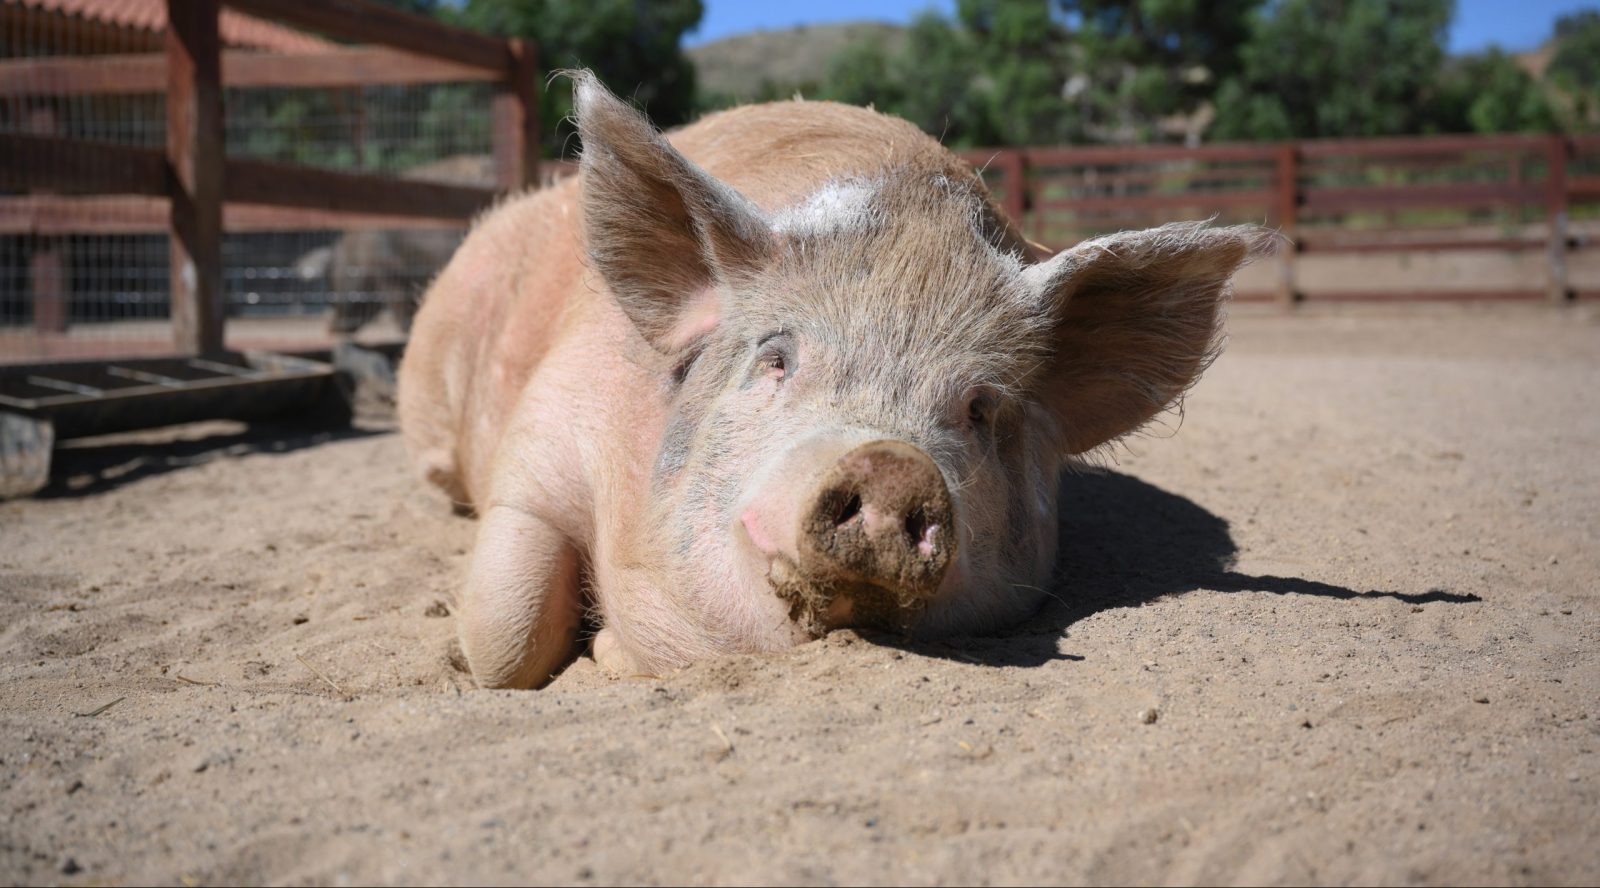 Von D Pig at Farm Sanctuary's Southern California shelter